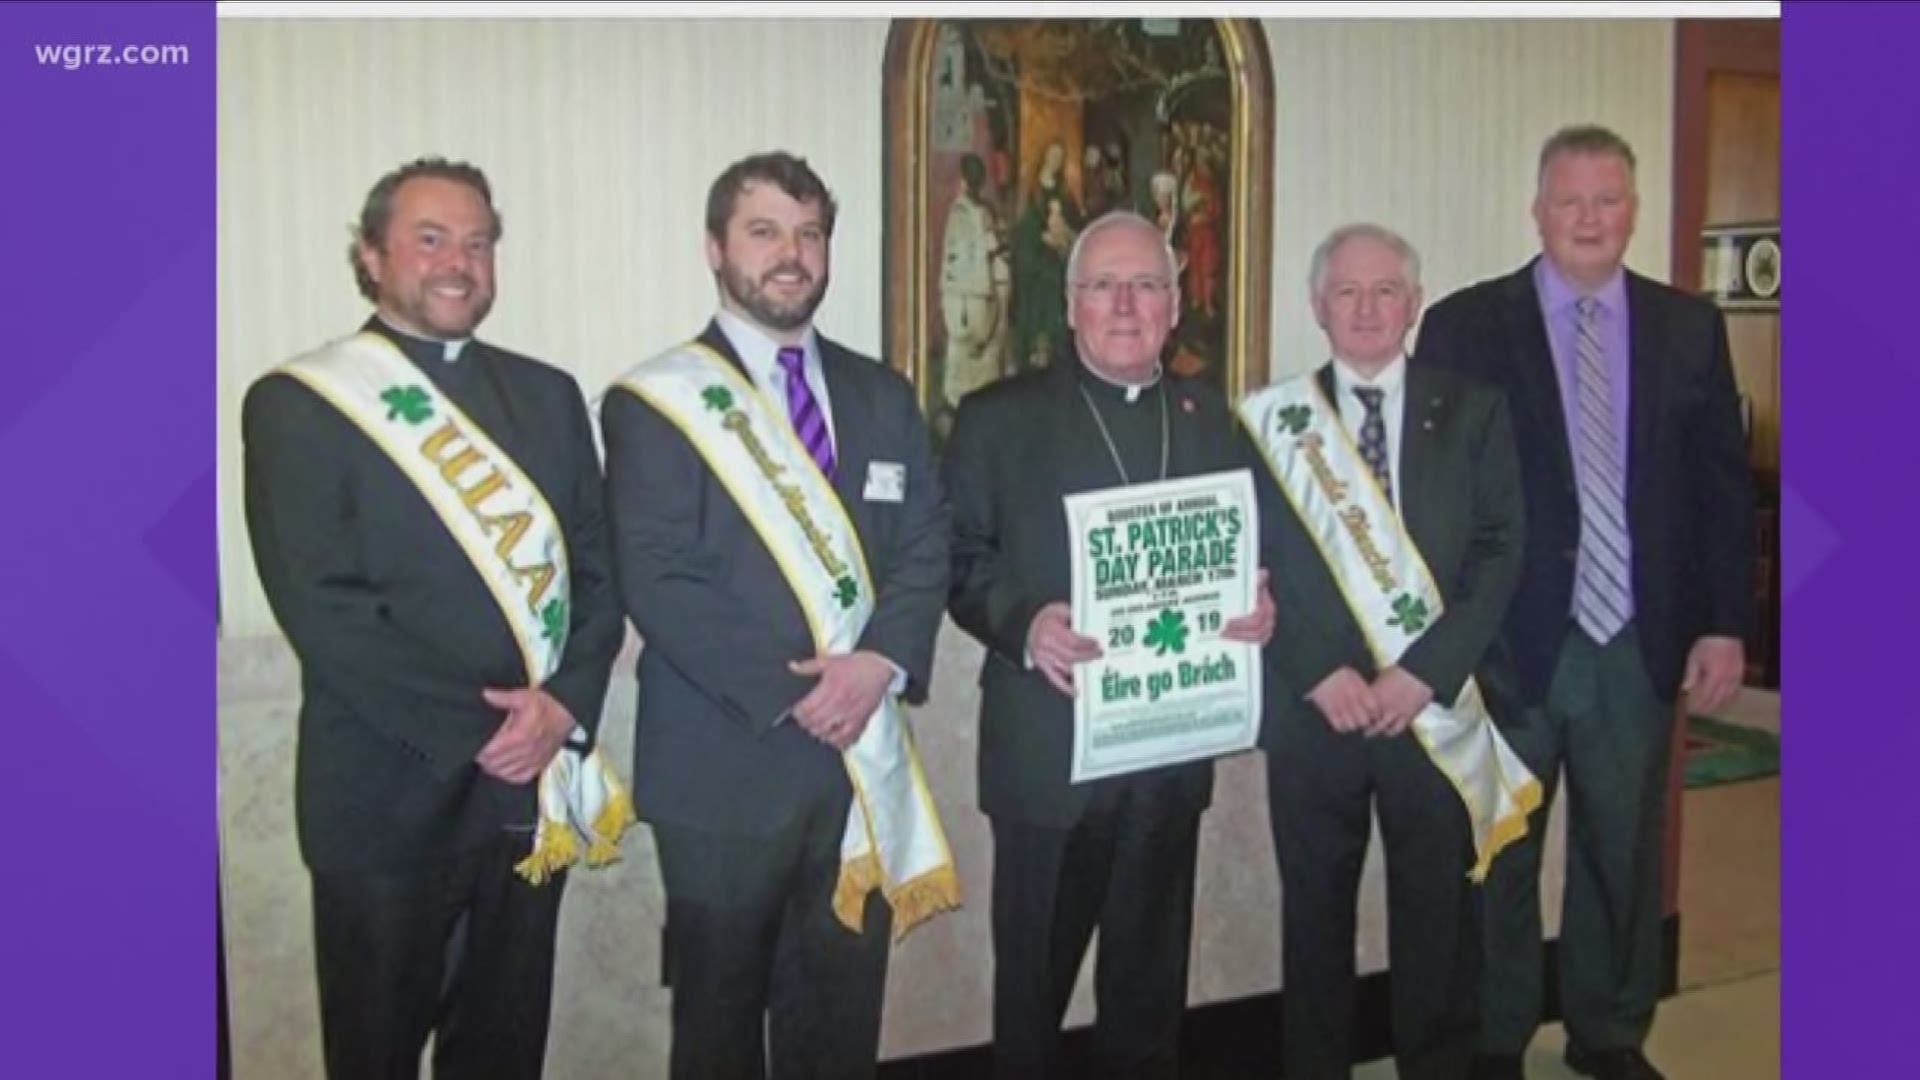 United irish american association asked bishop malone to walk in the parade.